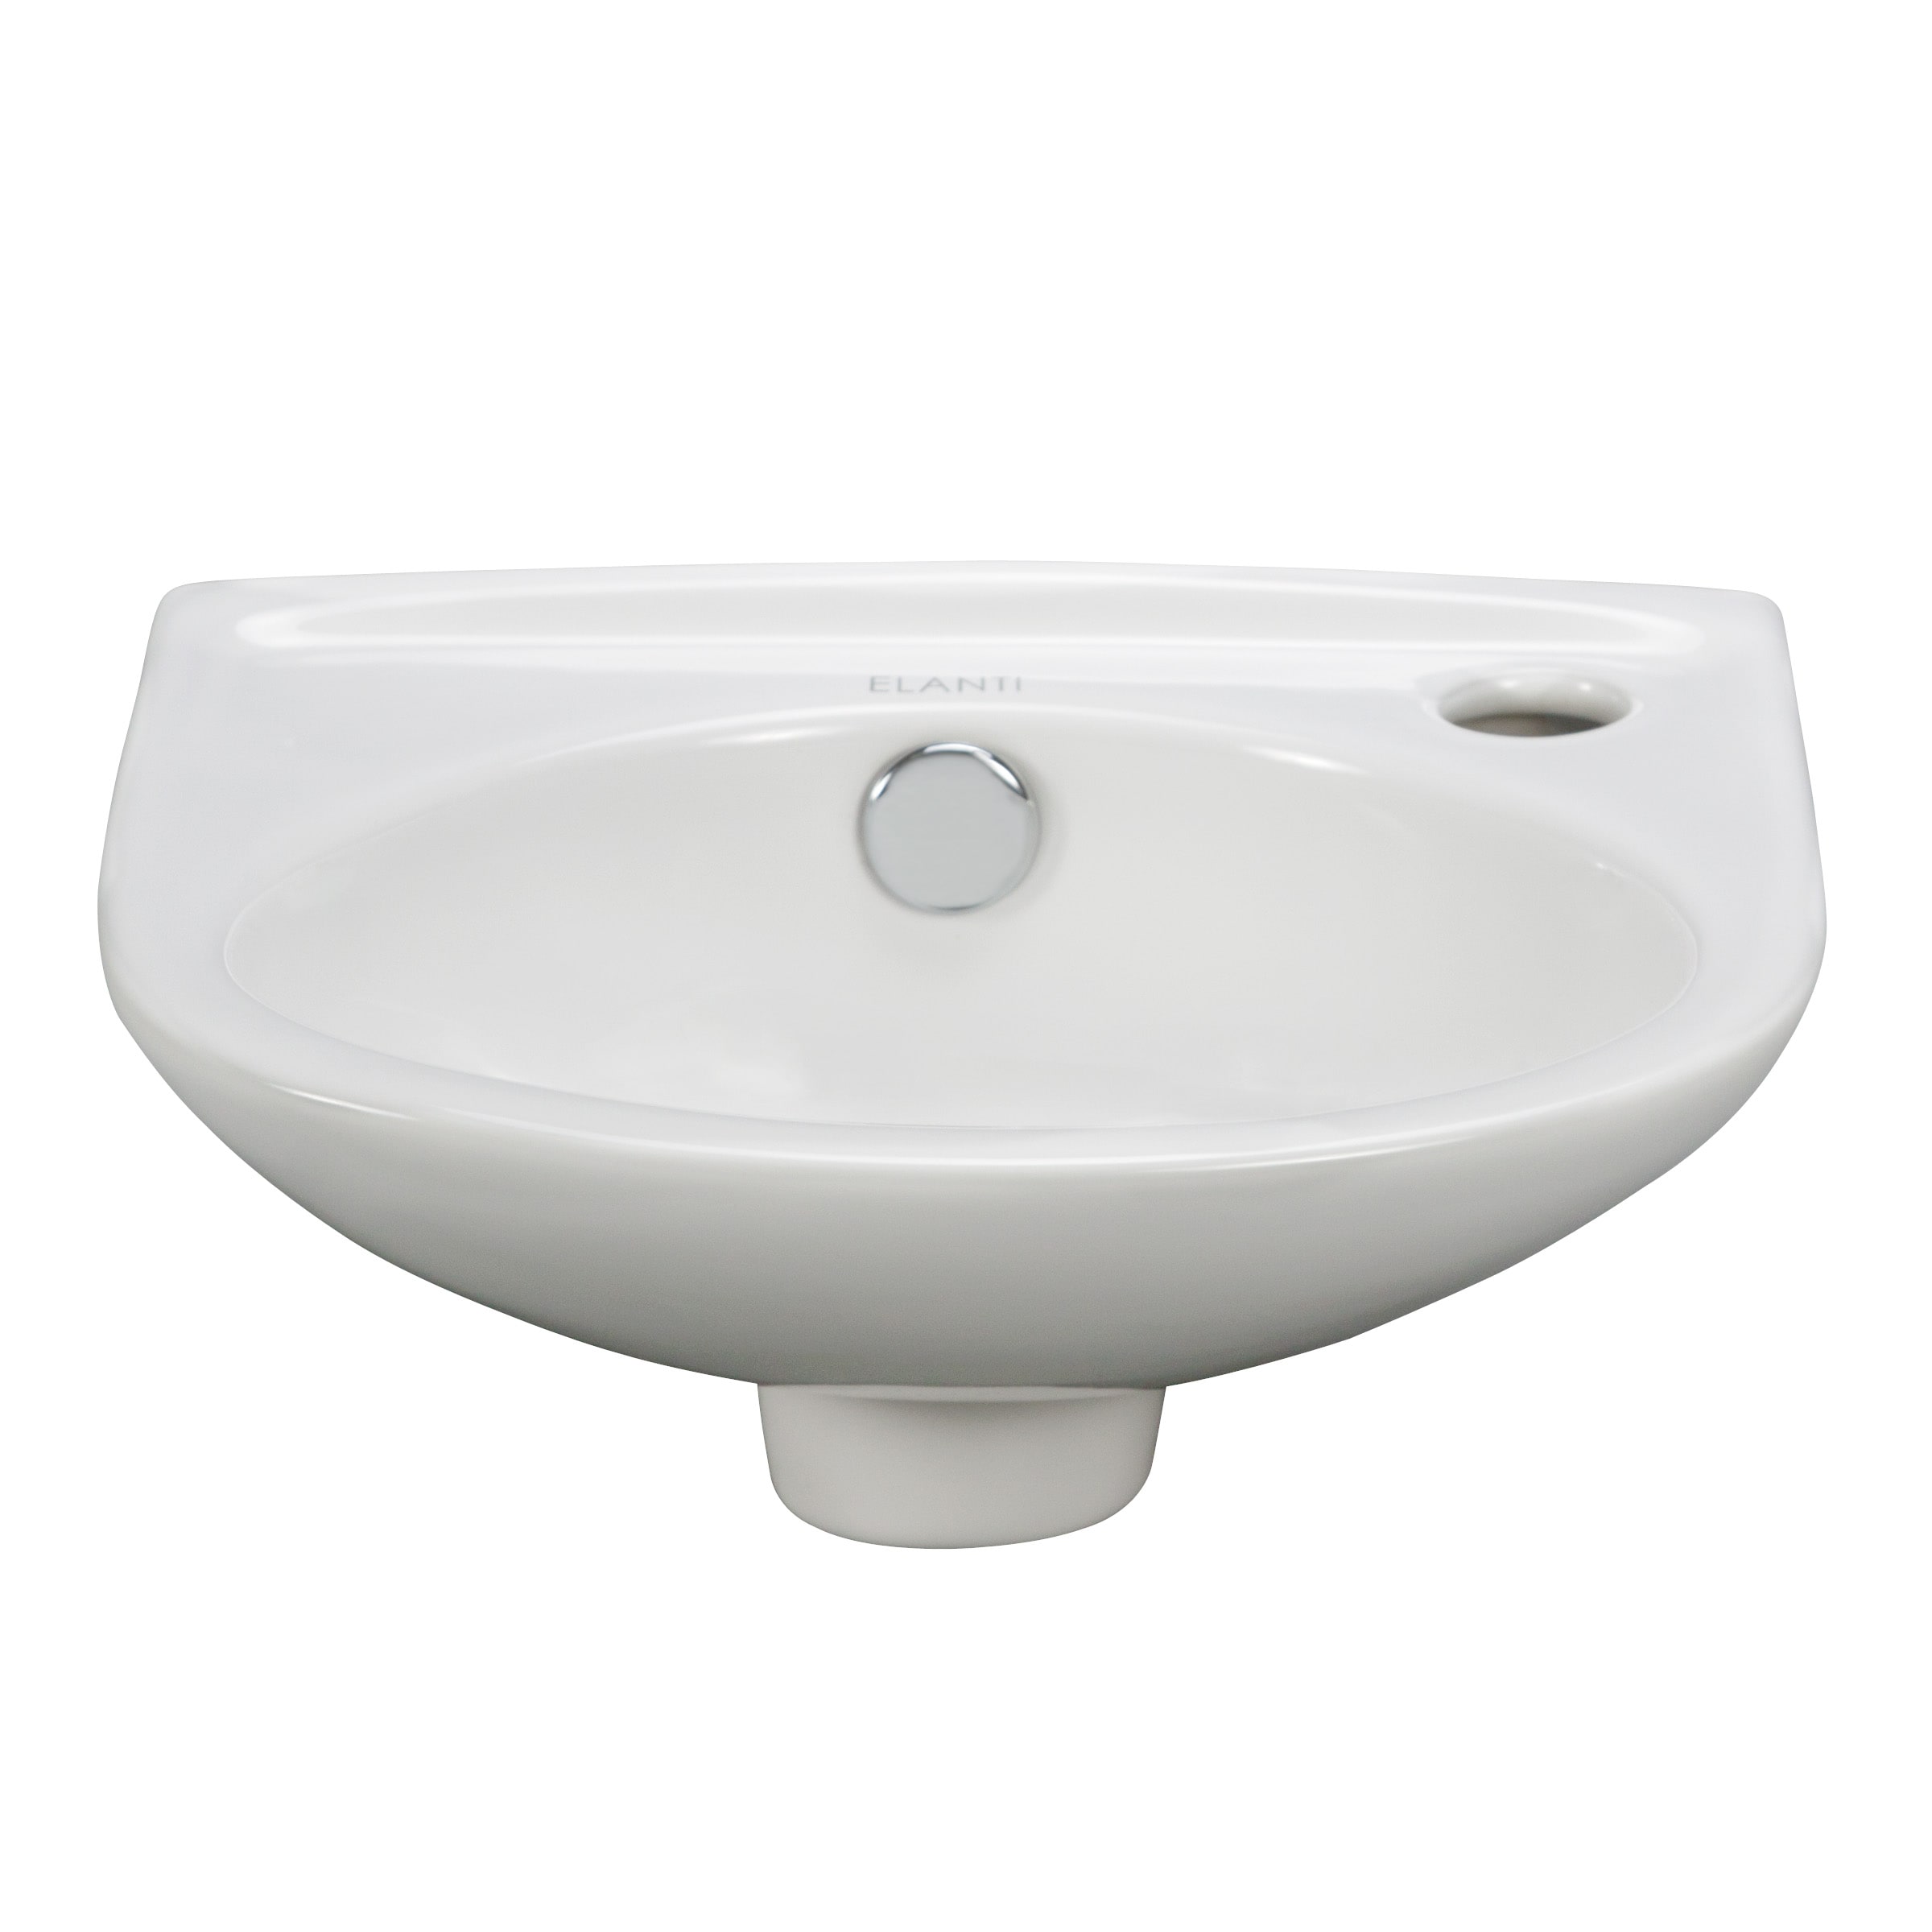 LED Water Security Alarm Bath Sink Tub Overflow Sensor Tank Water Lack Alarm 